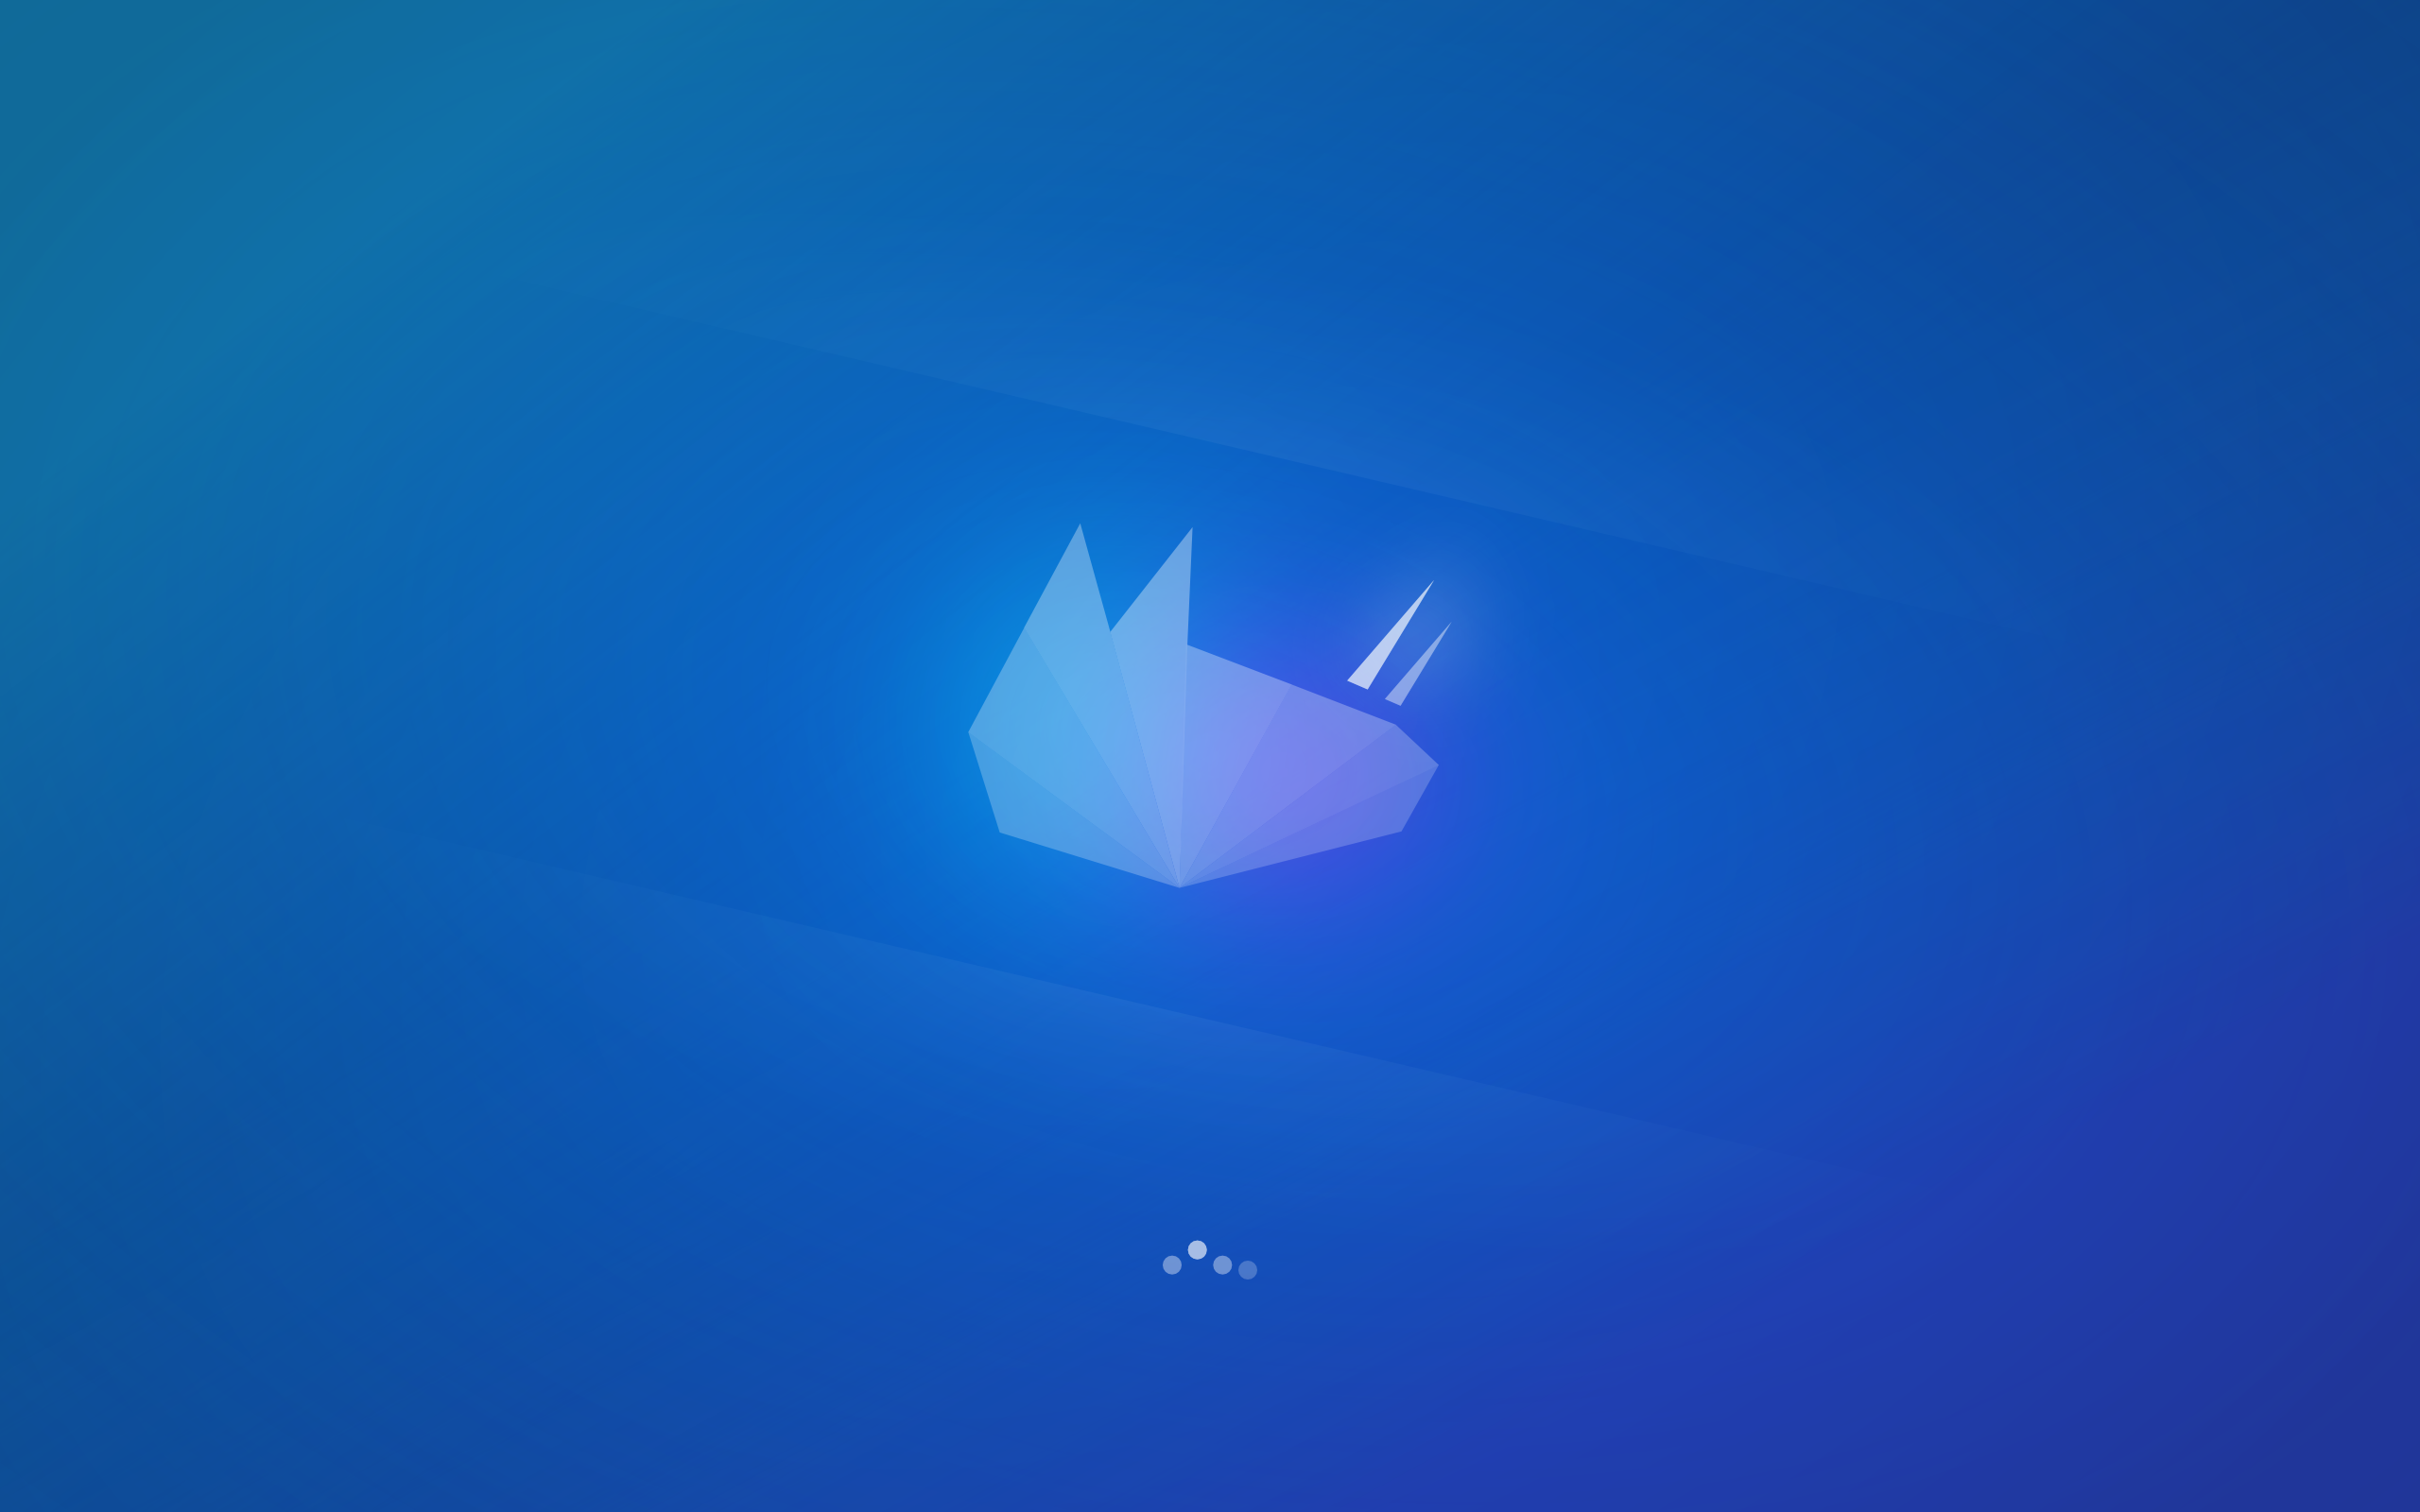 General 2560x1600 Xubuntu Linux blue background minimalism digital art artwork abstract